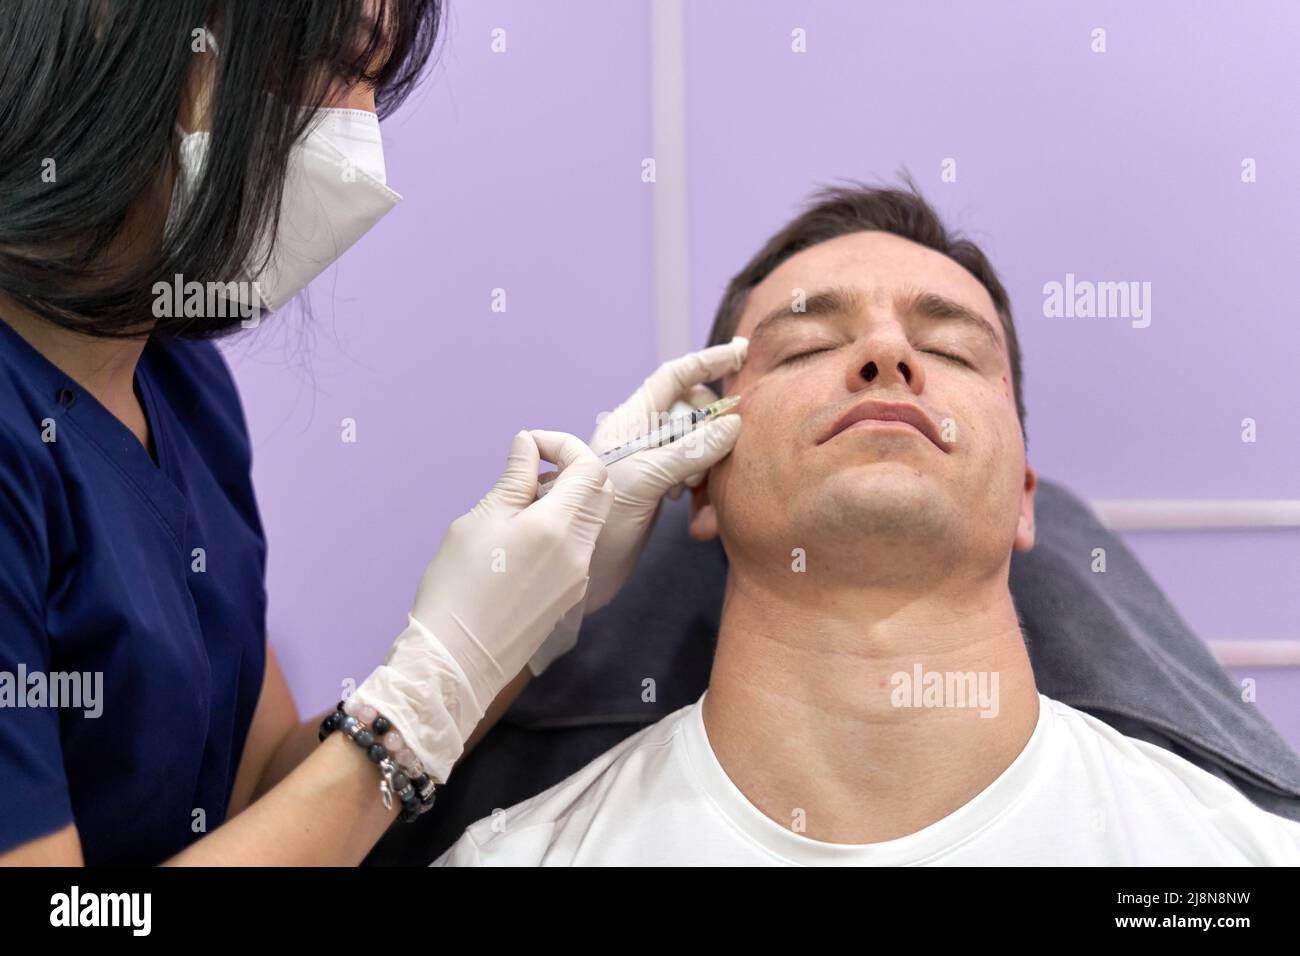 Man receiving forehead botox injection for facial rejuvenation treatment Stock Photo